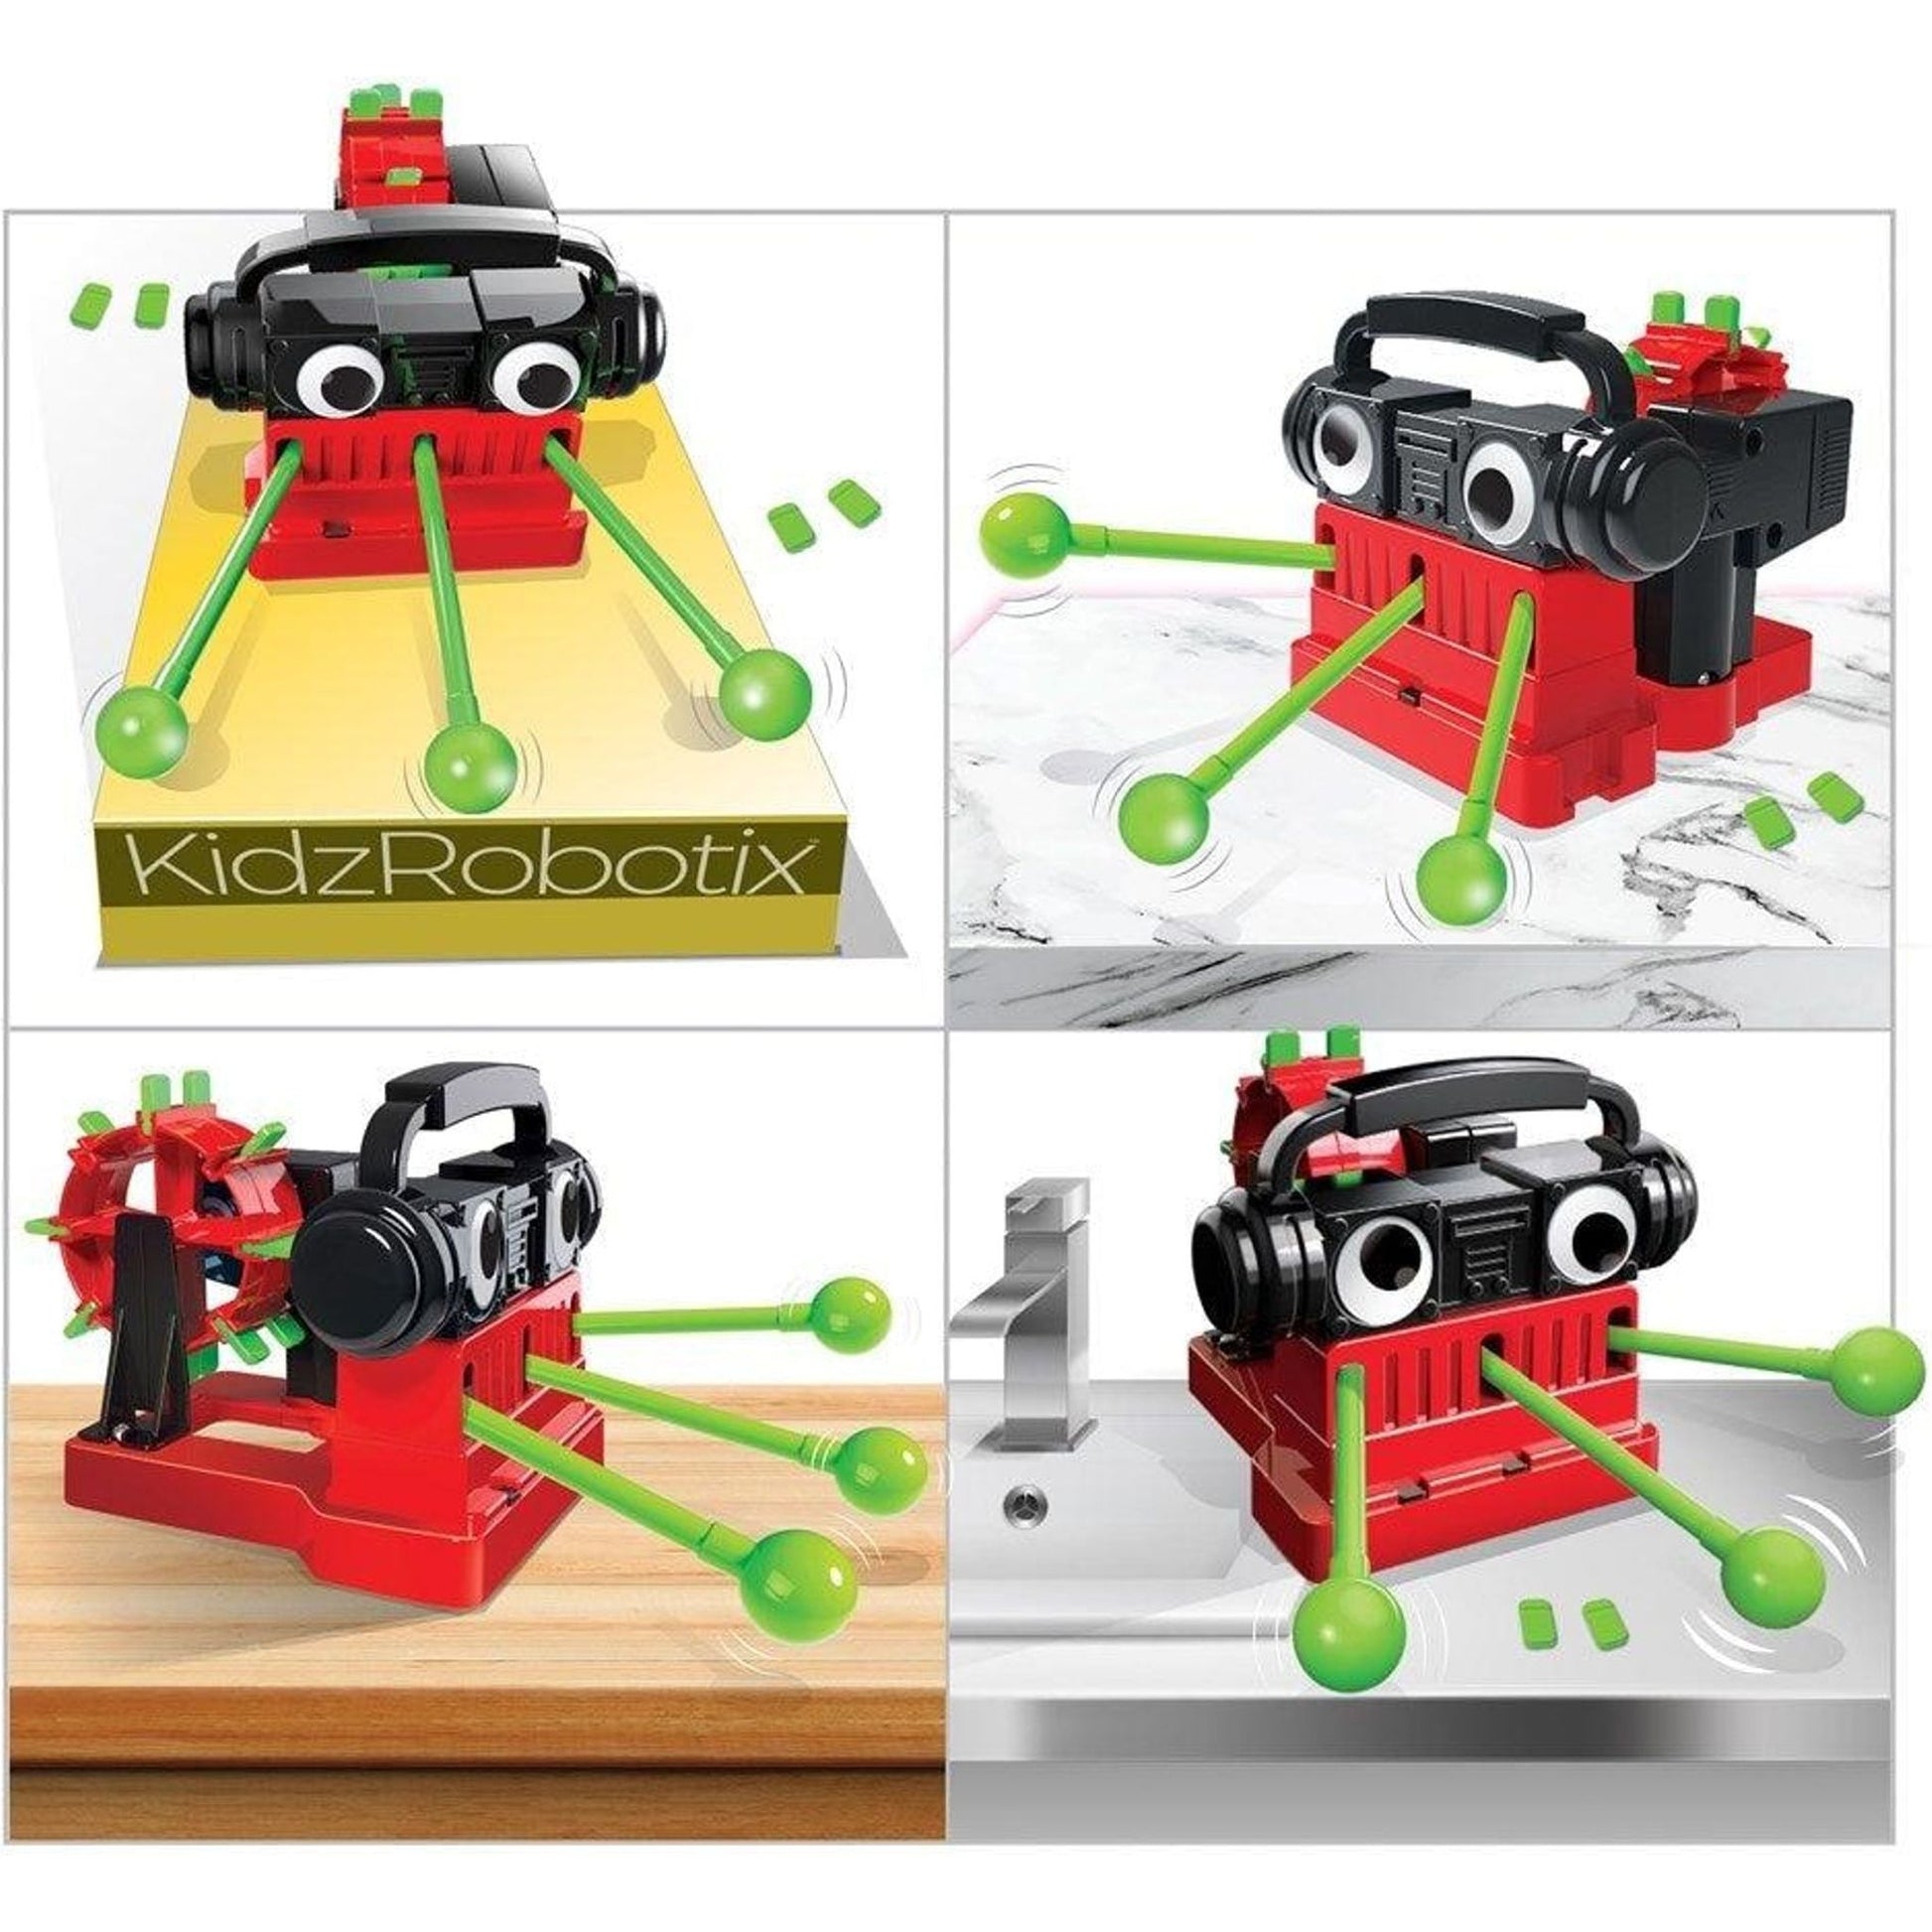 KidzRobotix: Drummer Robot - Toybox Tales